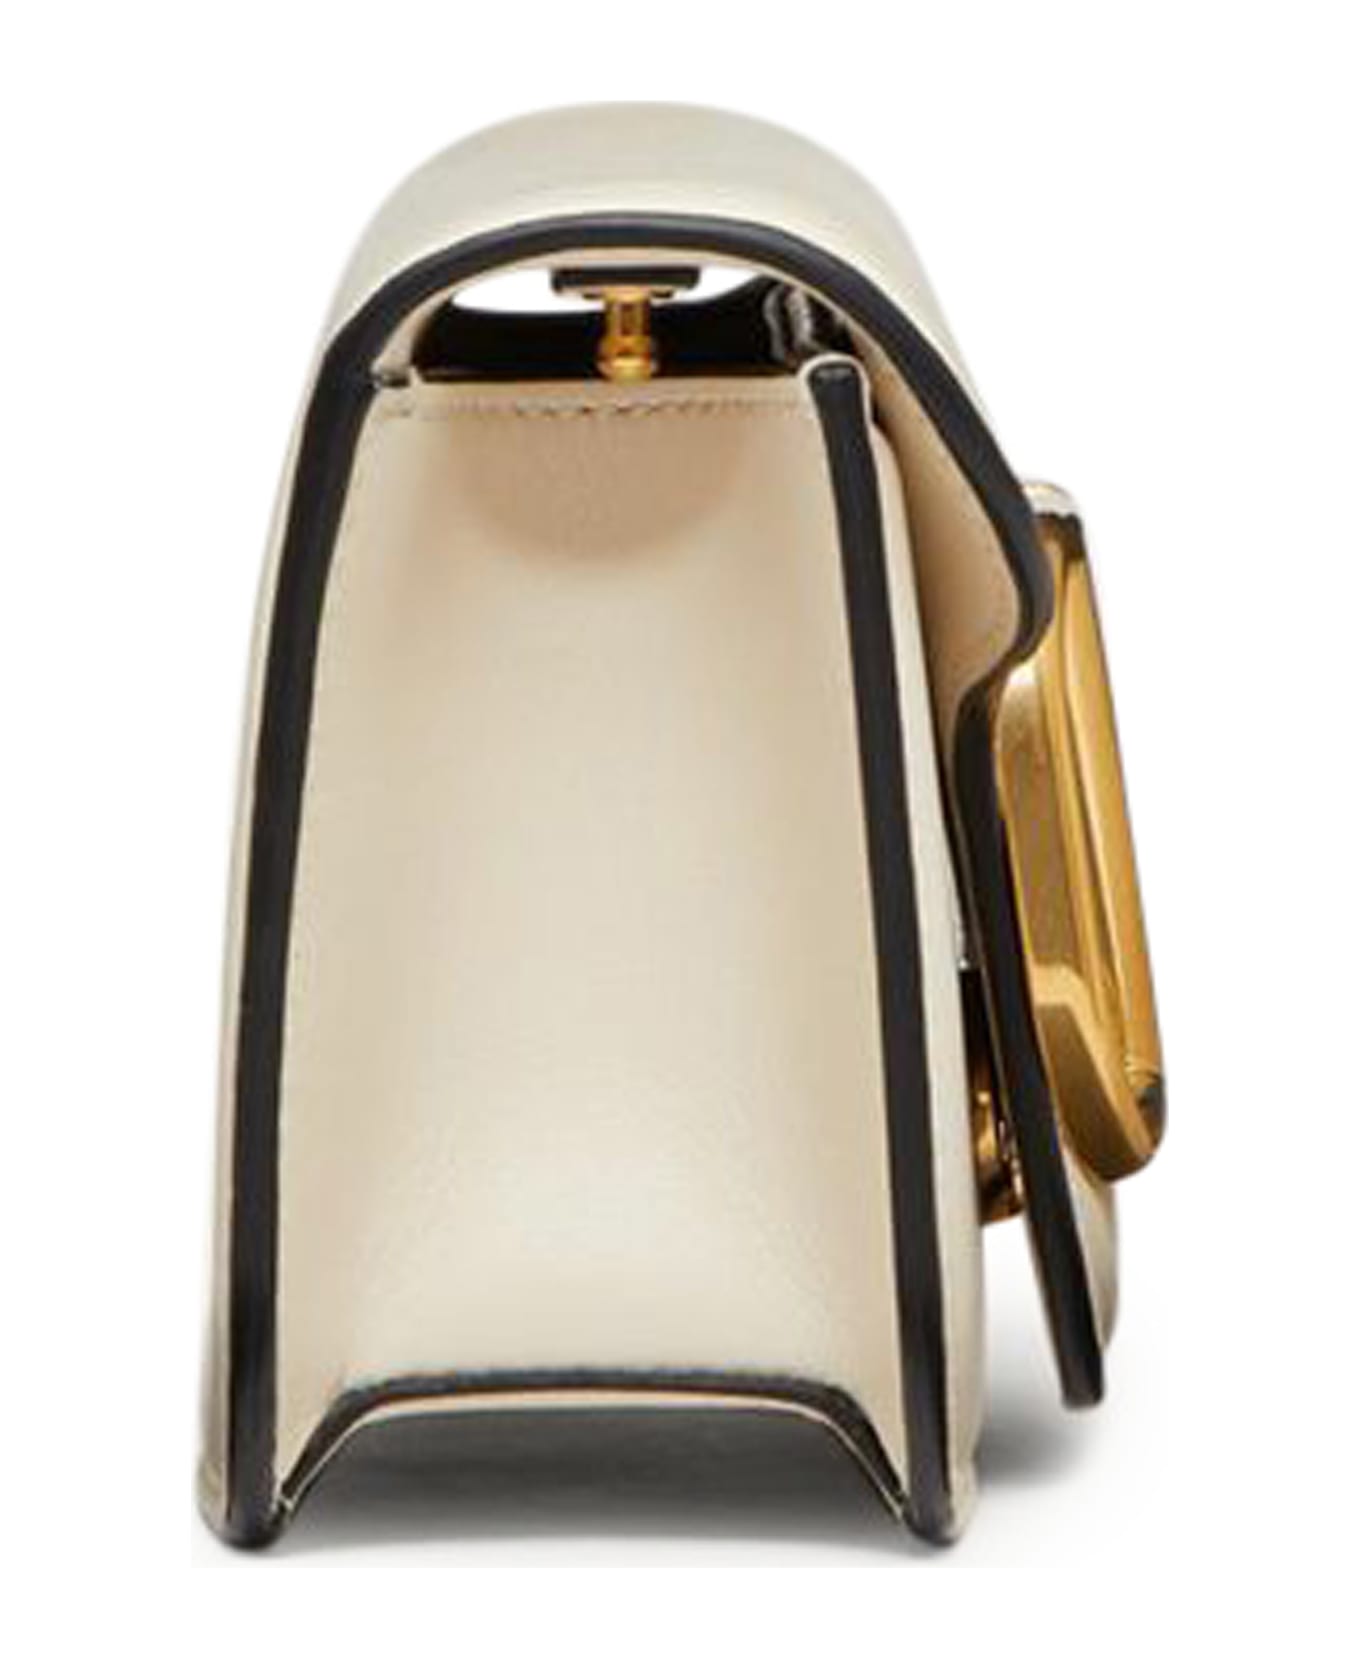 Valentino Garavani Small Shoulder Bag Loco` Vitello/antique Brass Logo - Light Ivory